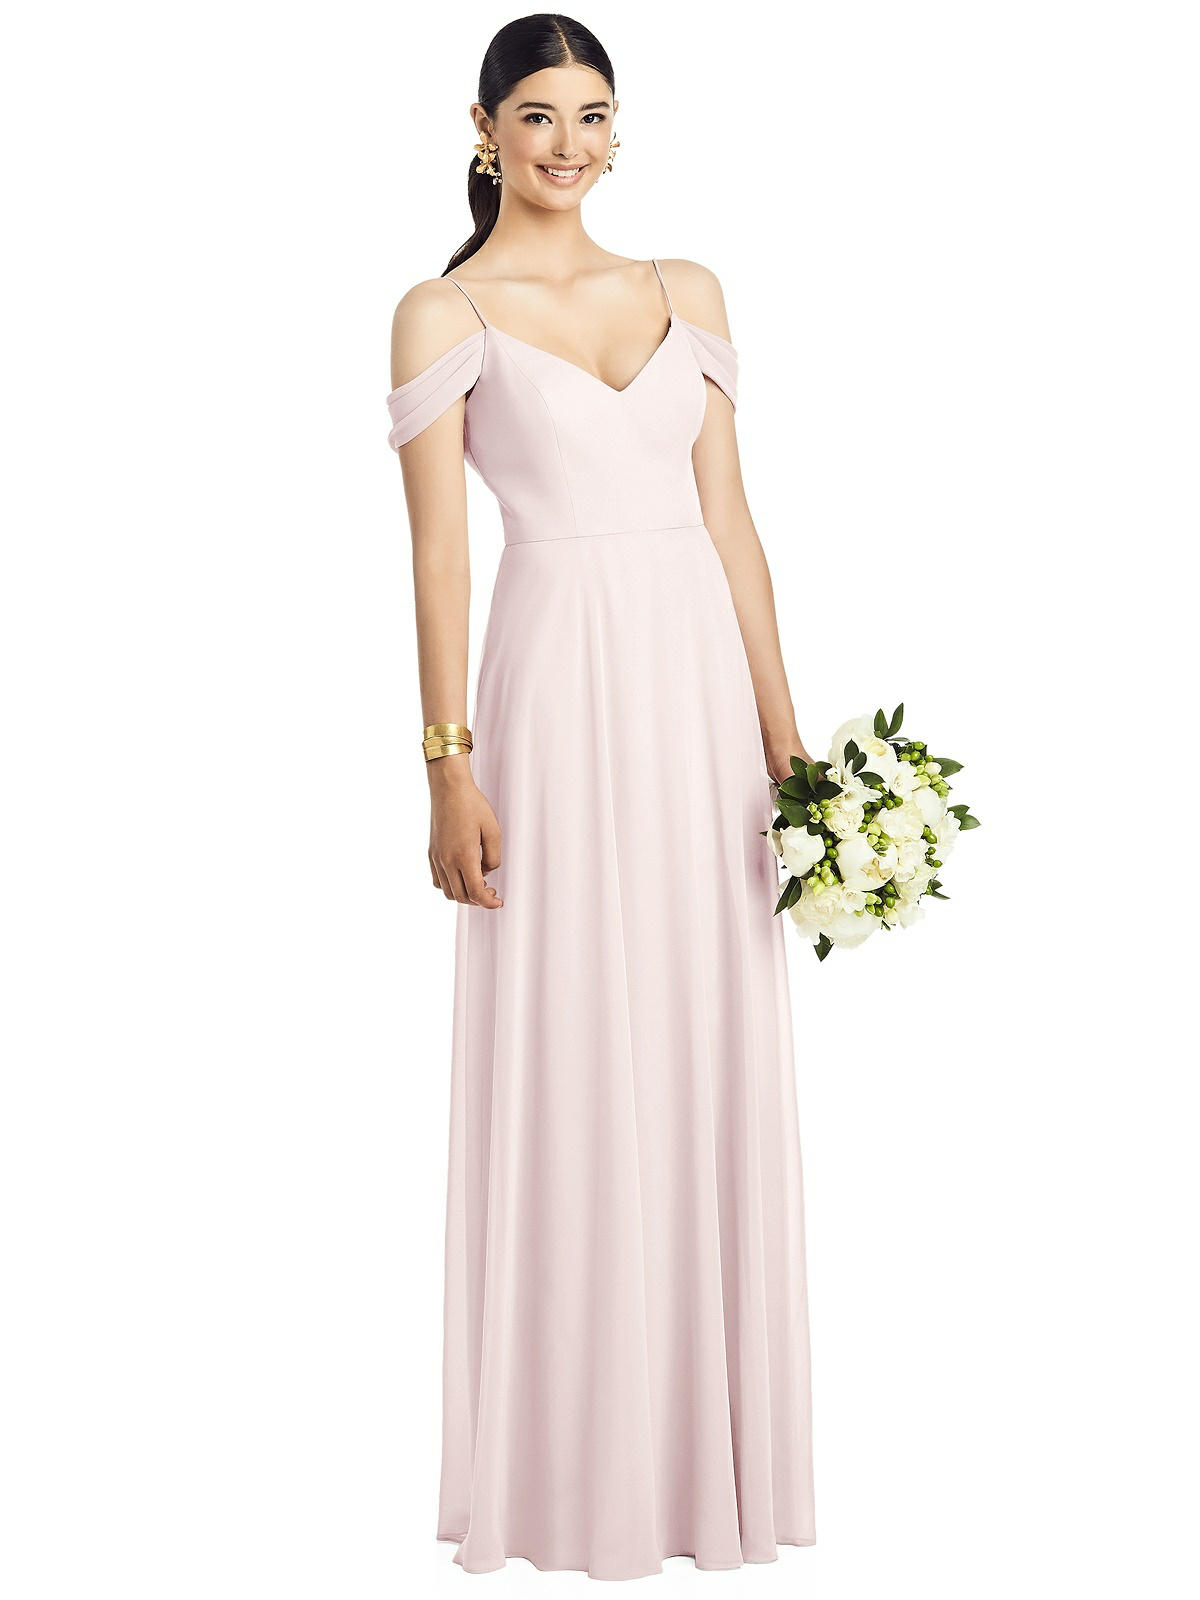 Eliza Blush Pink Bridesmaid Dress by Dessy